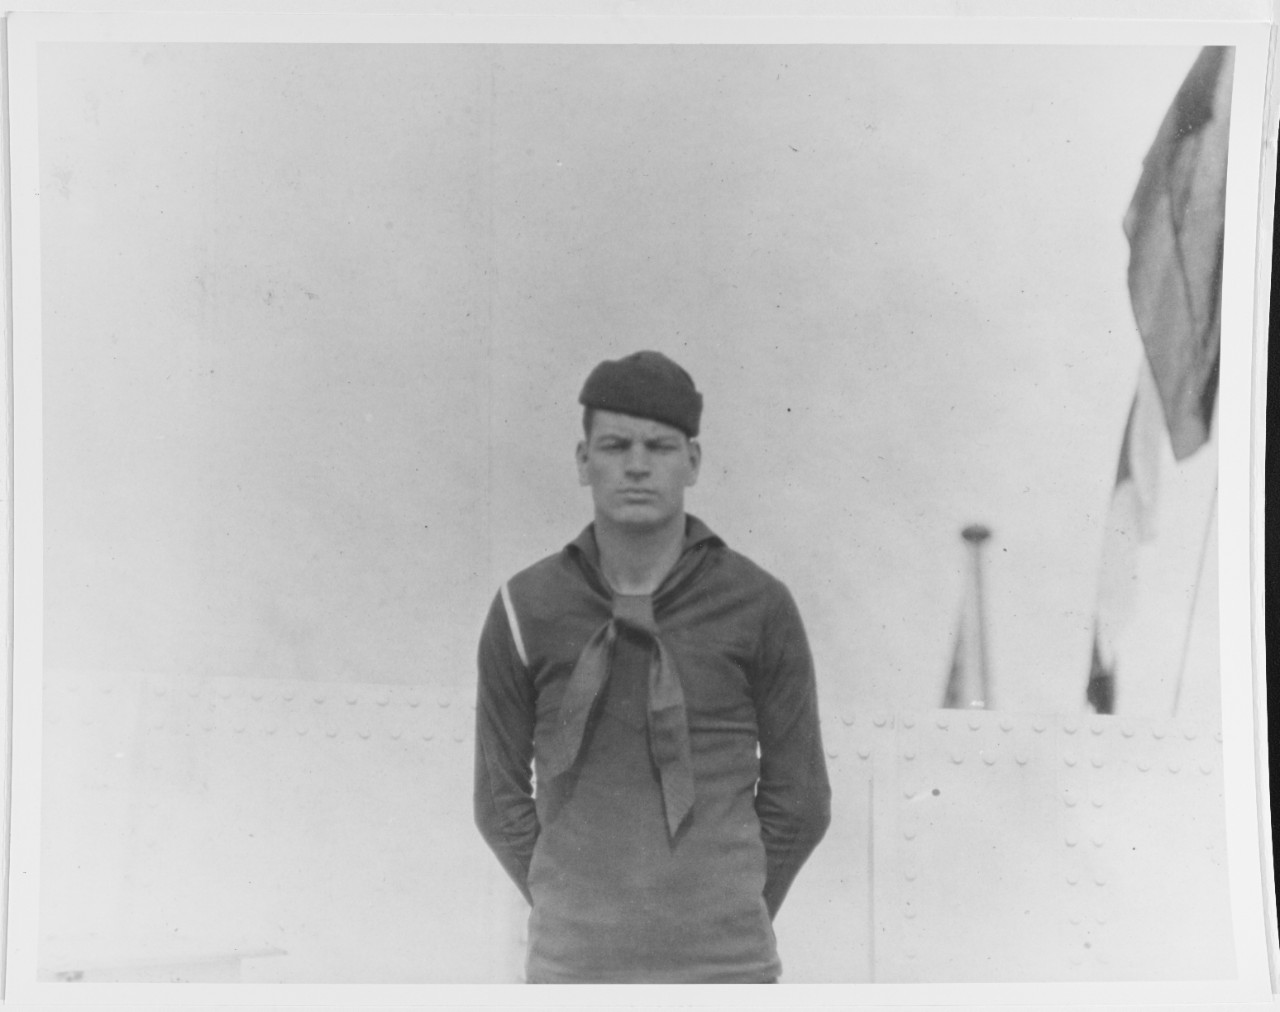 Seaman 1/C William G. Kelly